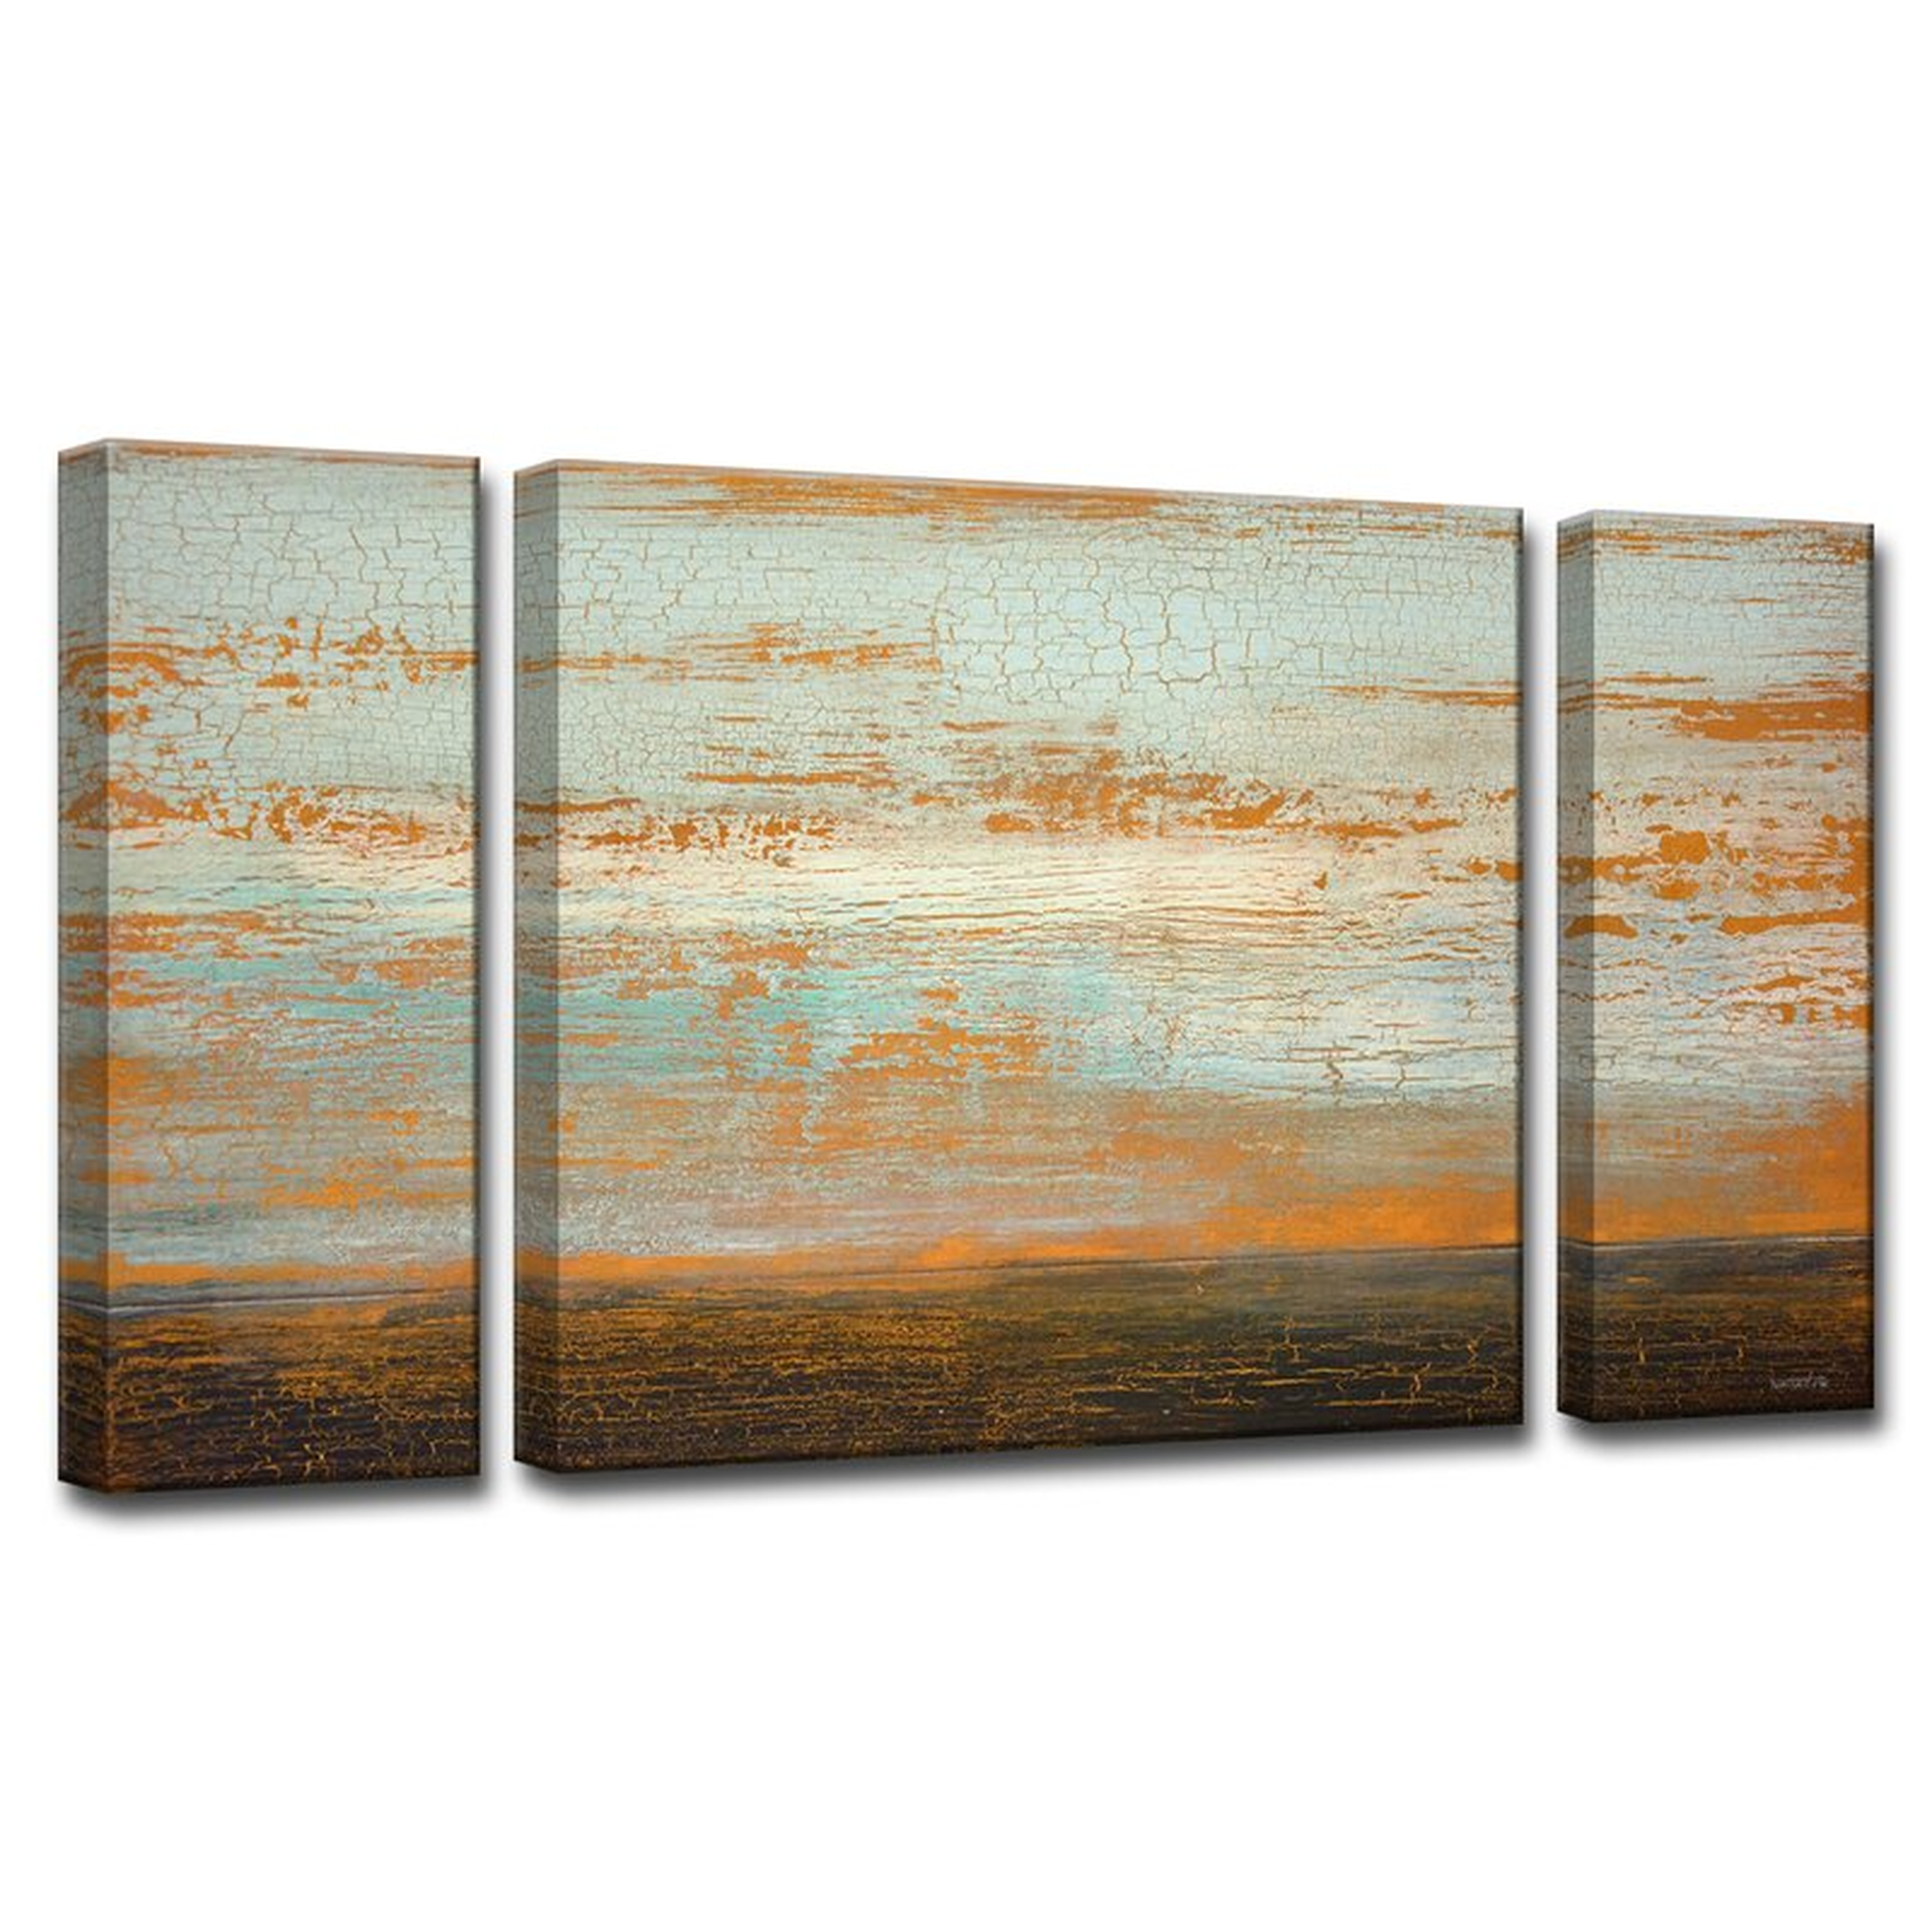 'Desert Flats' by Norman Wyatt Jr. 3 Piece Wrapped Canvas Painting Print Set - Wayfair